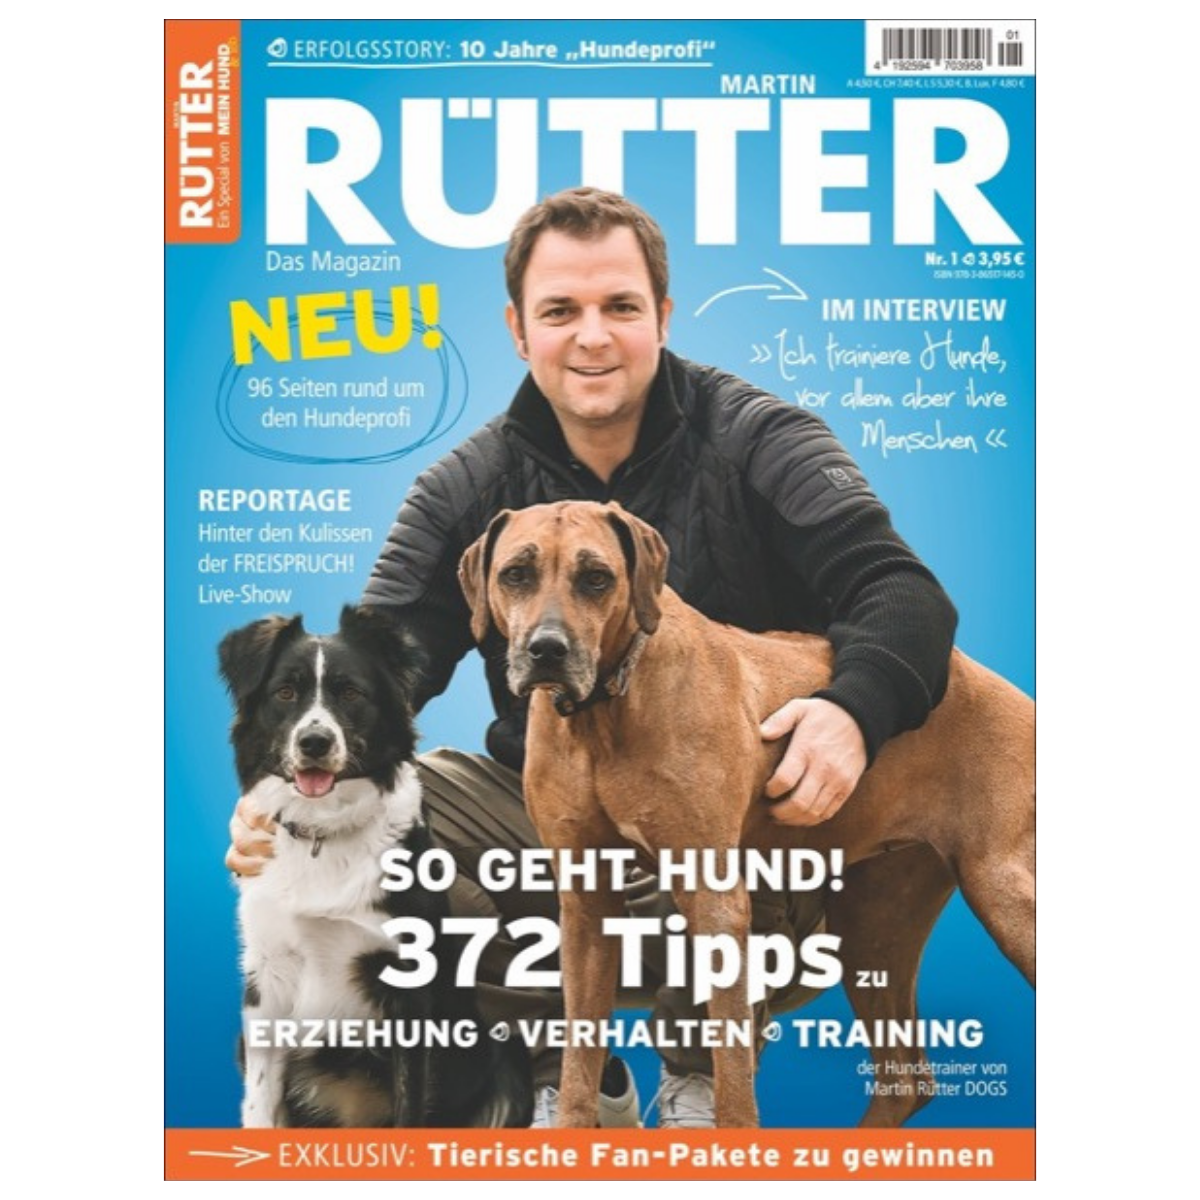 Martin Rütter - Das Magazin - Digitale Ausgabe 1/2019